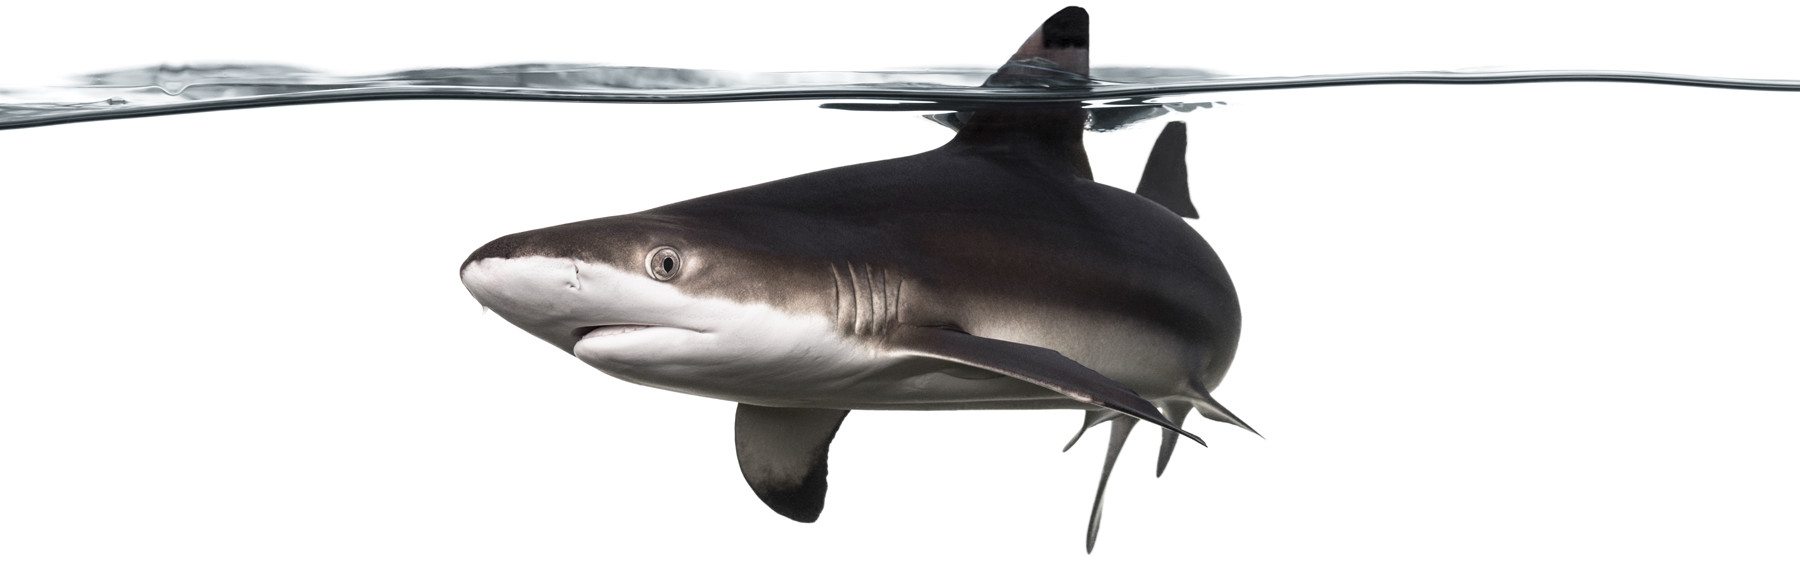 Myrtle Beach Sharks